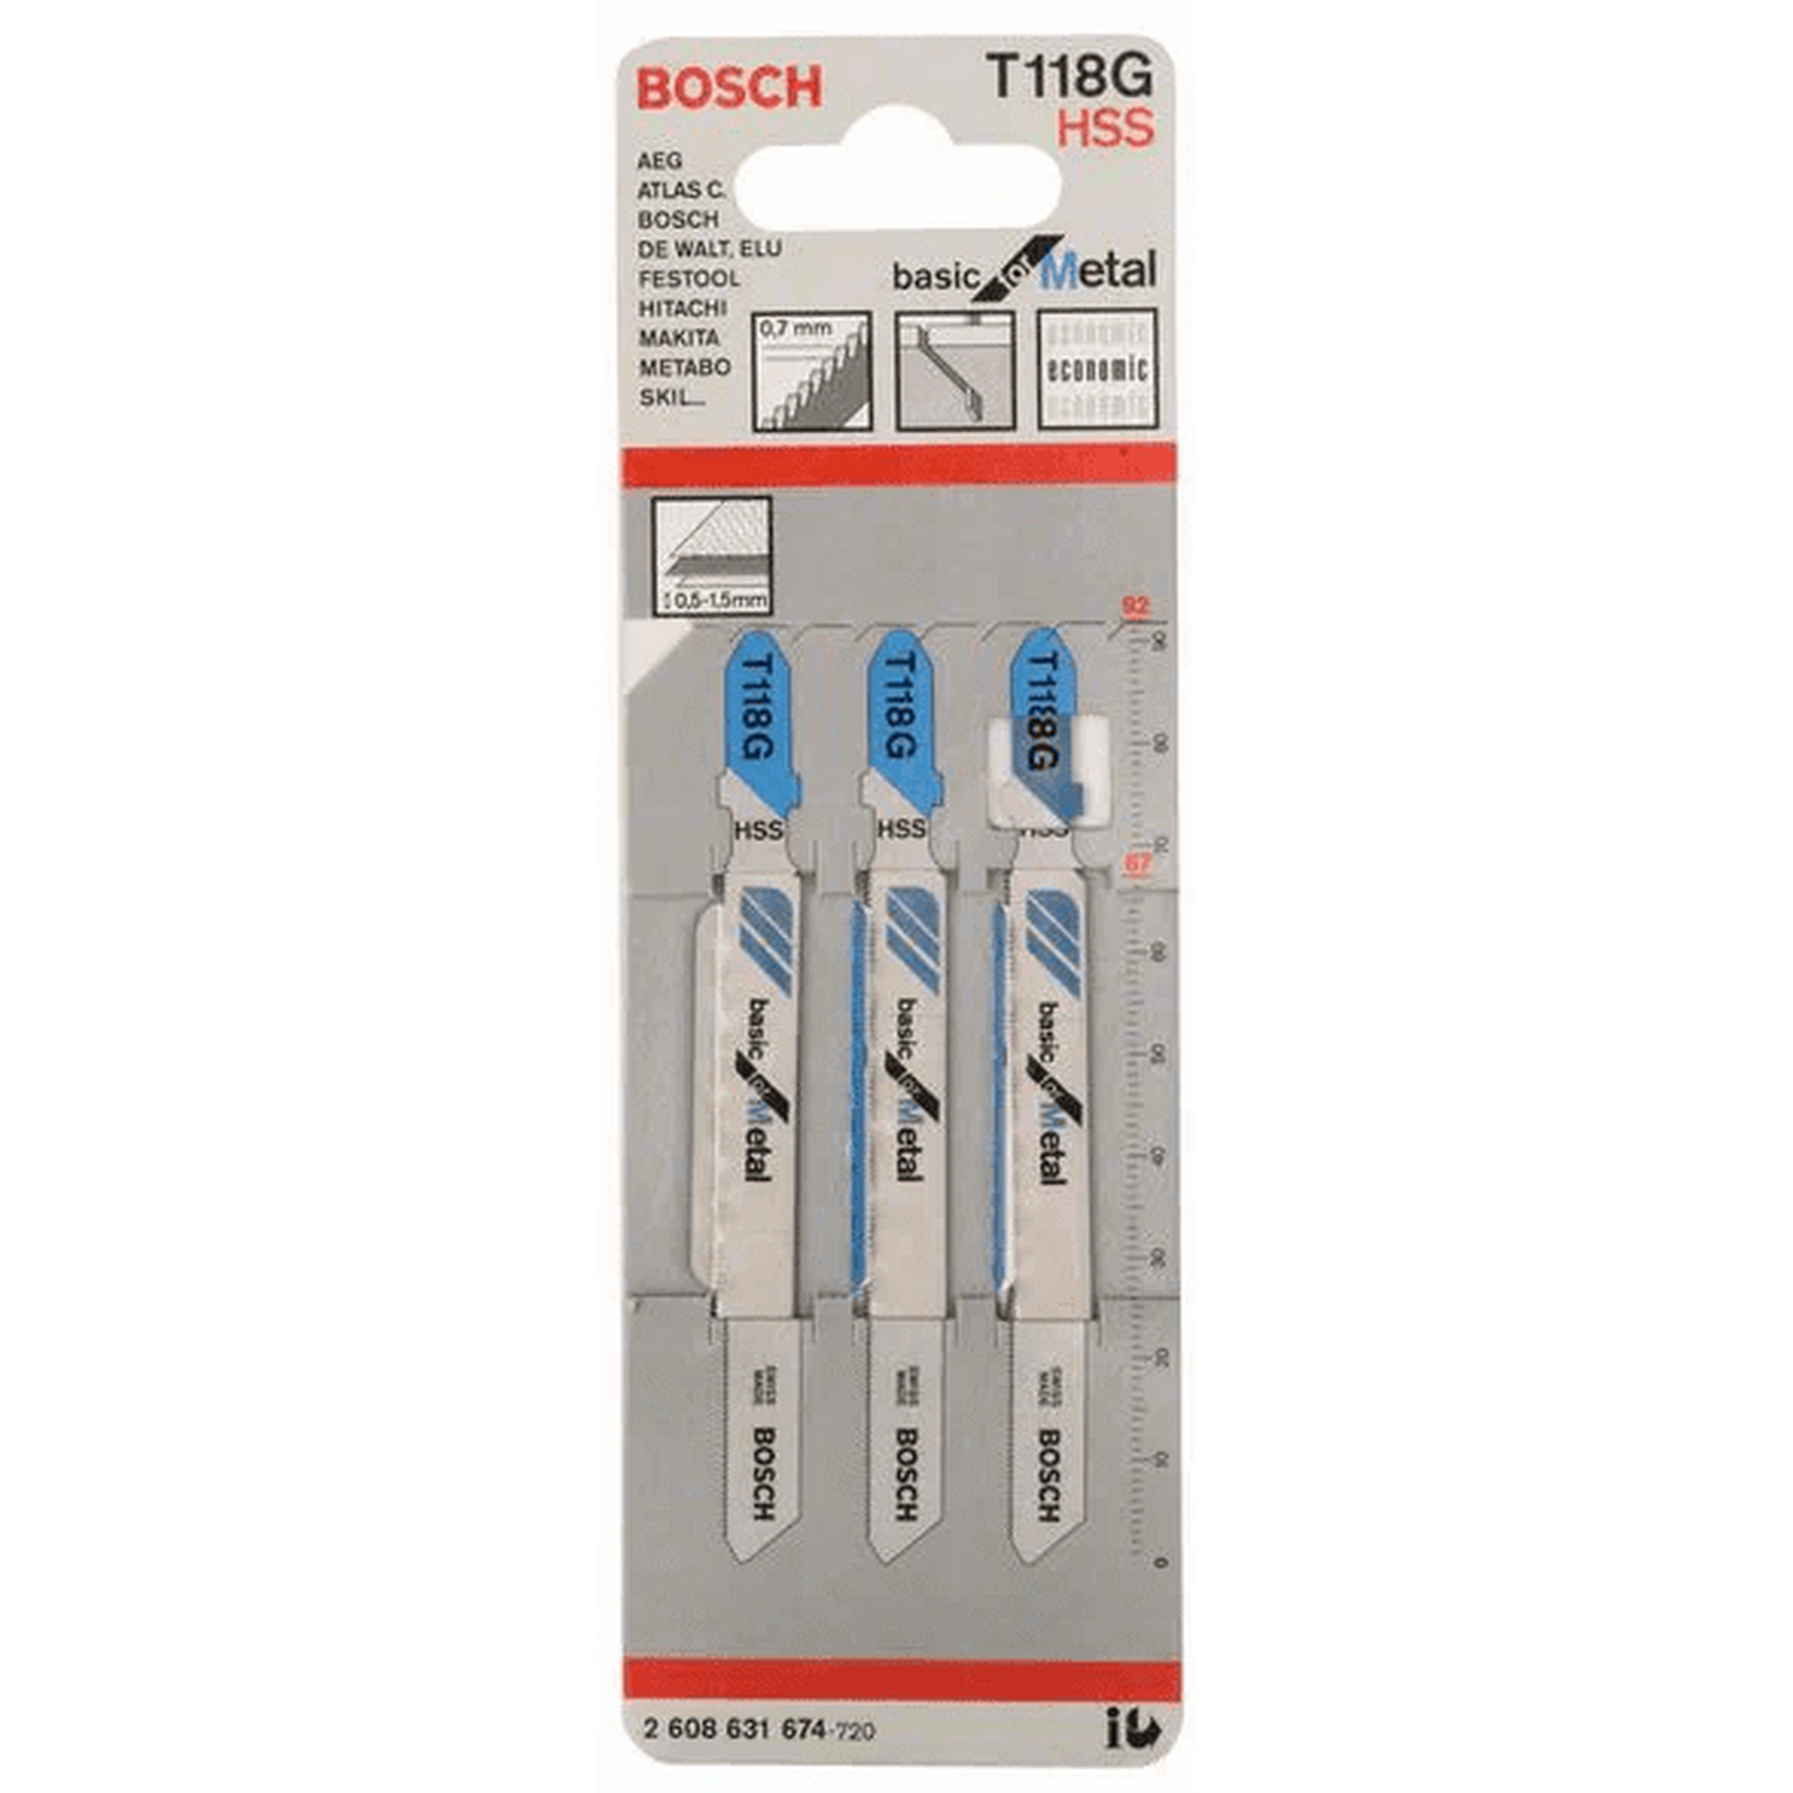 Пилки для лобзика Bosch Т118G (3шт) 2608631674